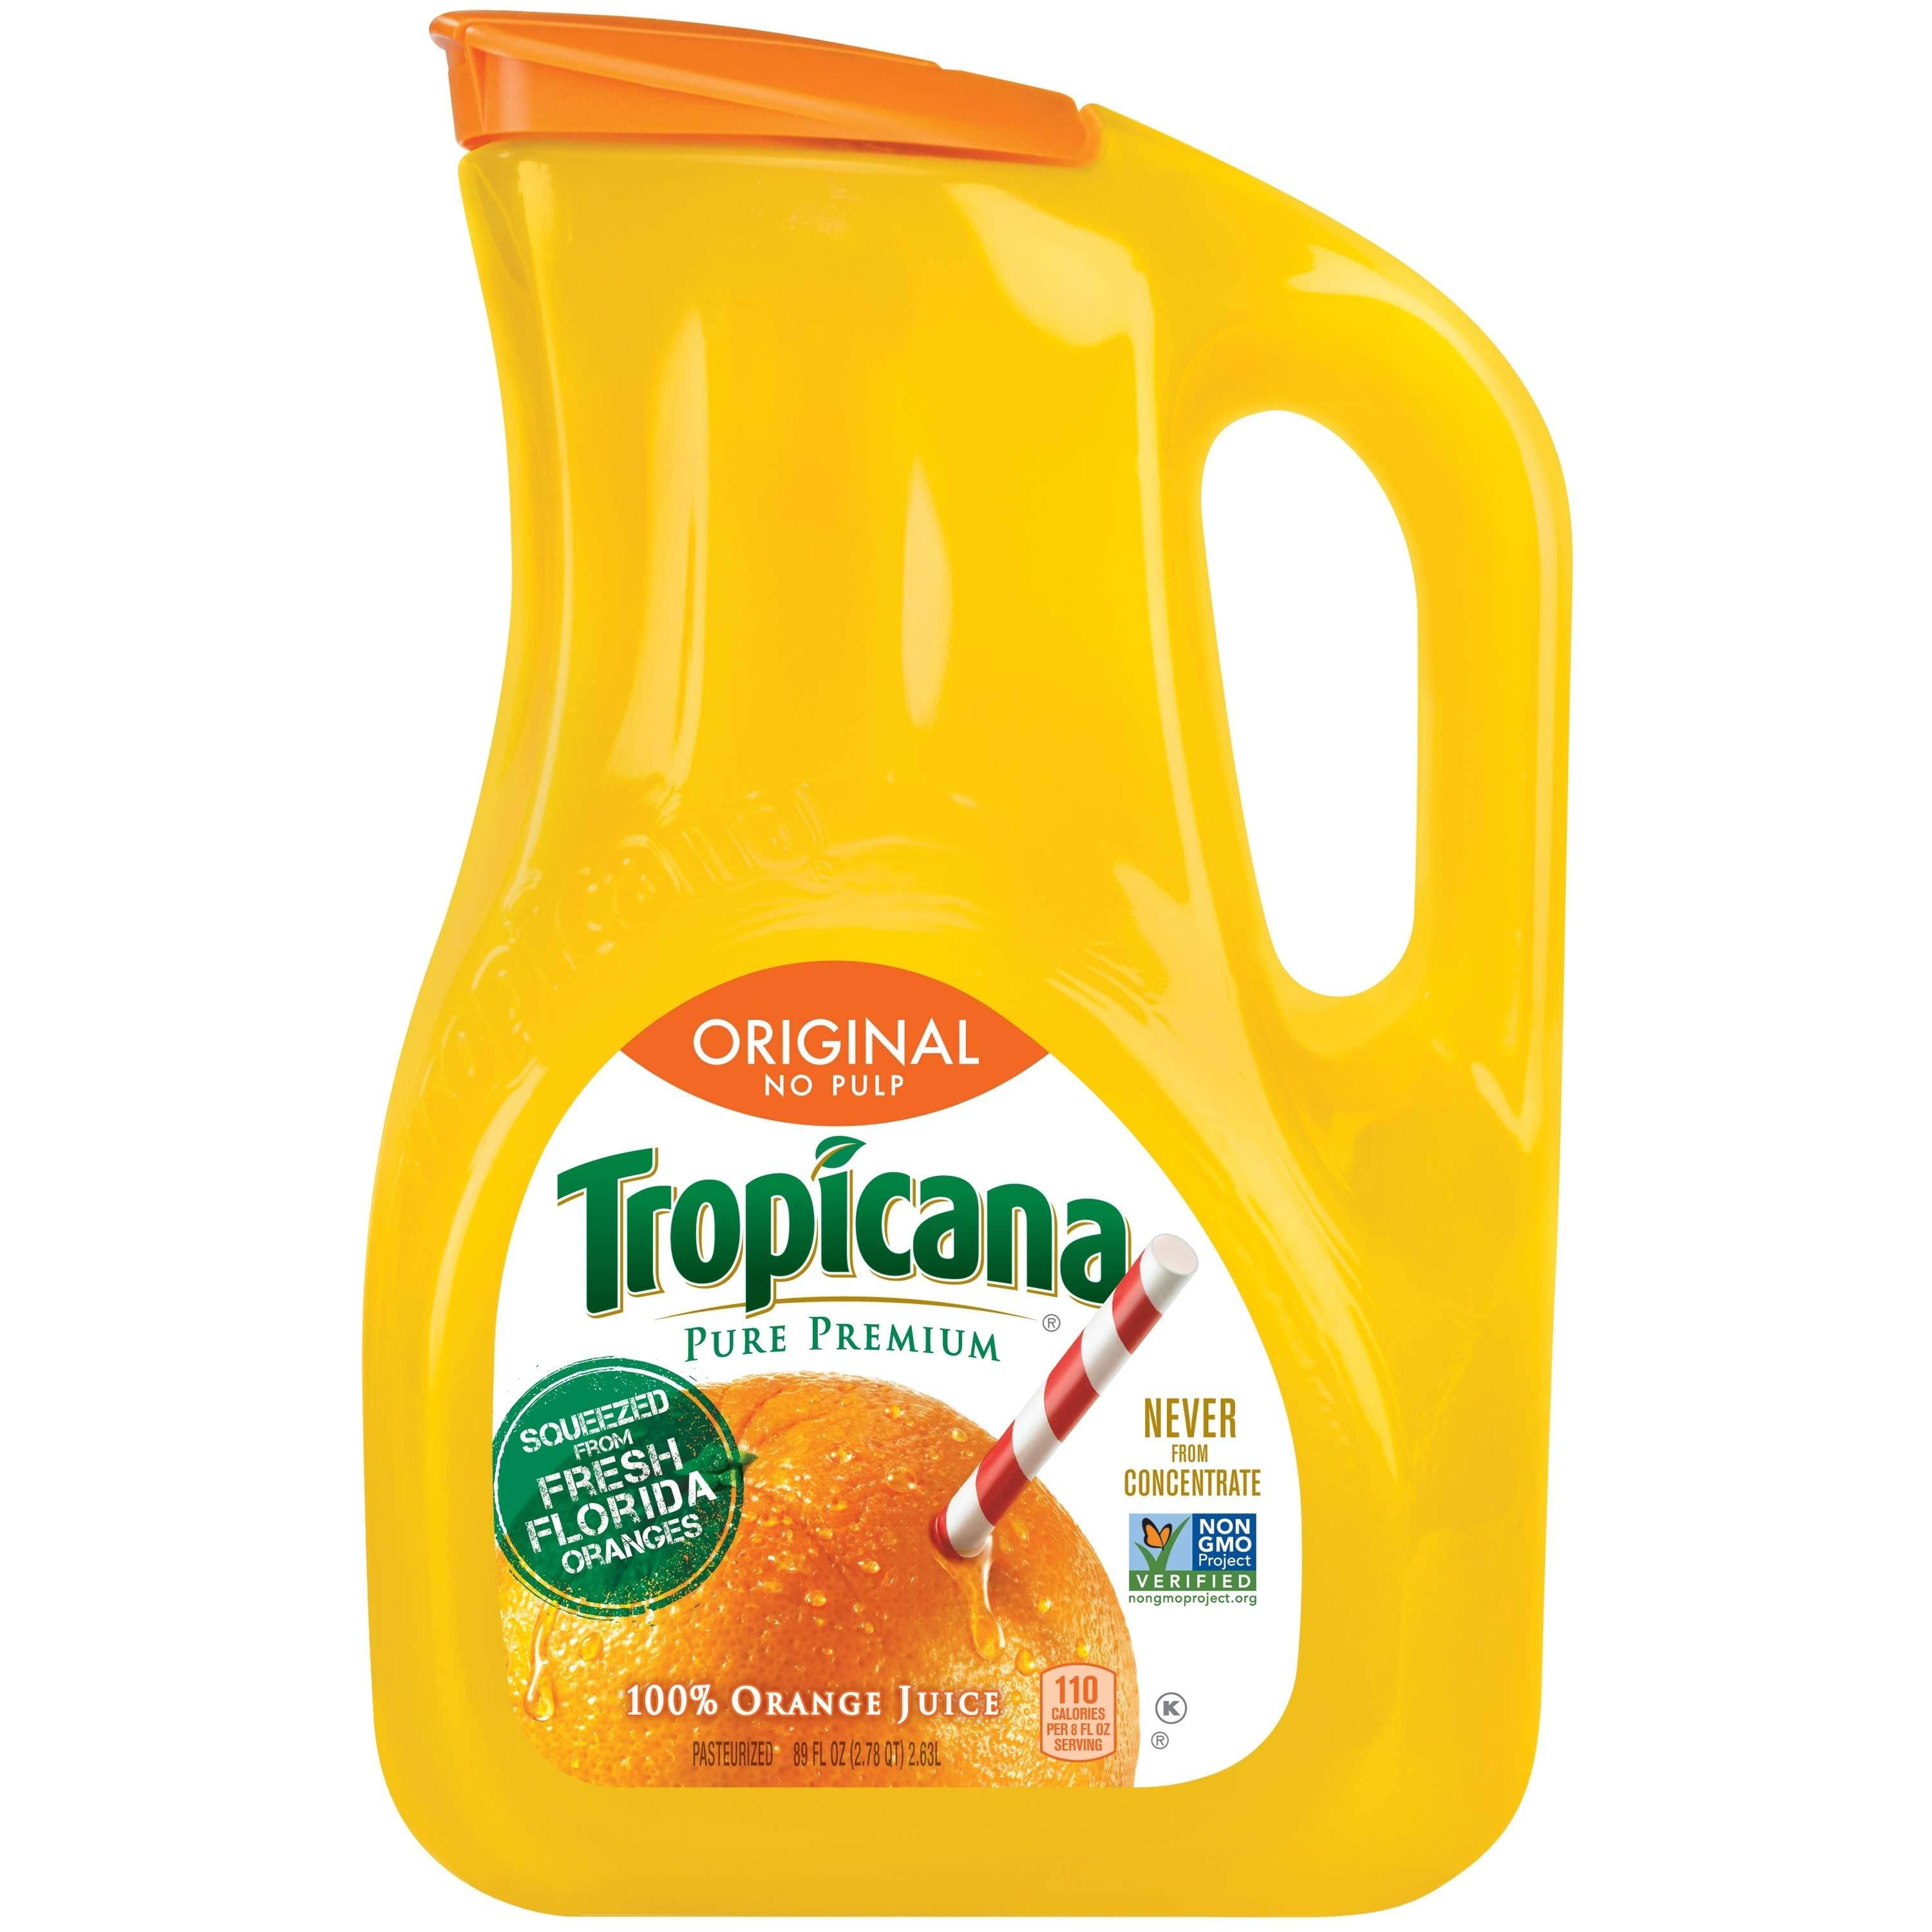 Tropicana Pure Premium Original No Pulp 100% Orange Juice - 89 oz